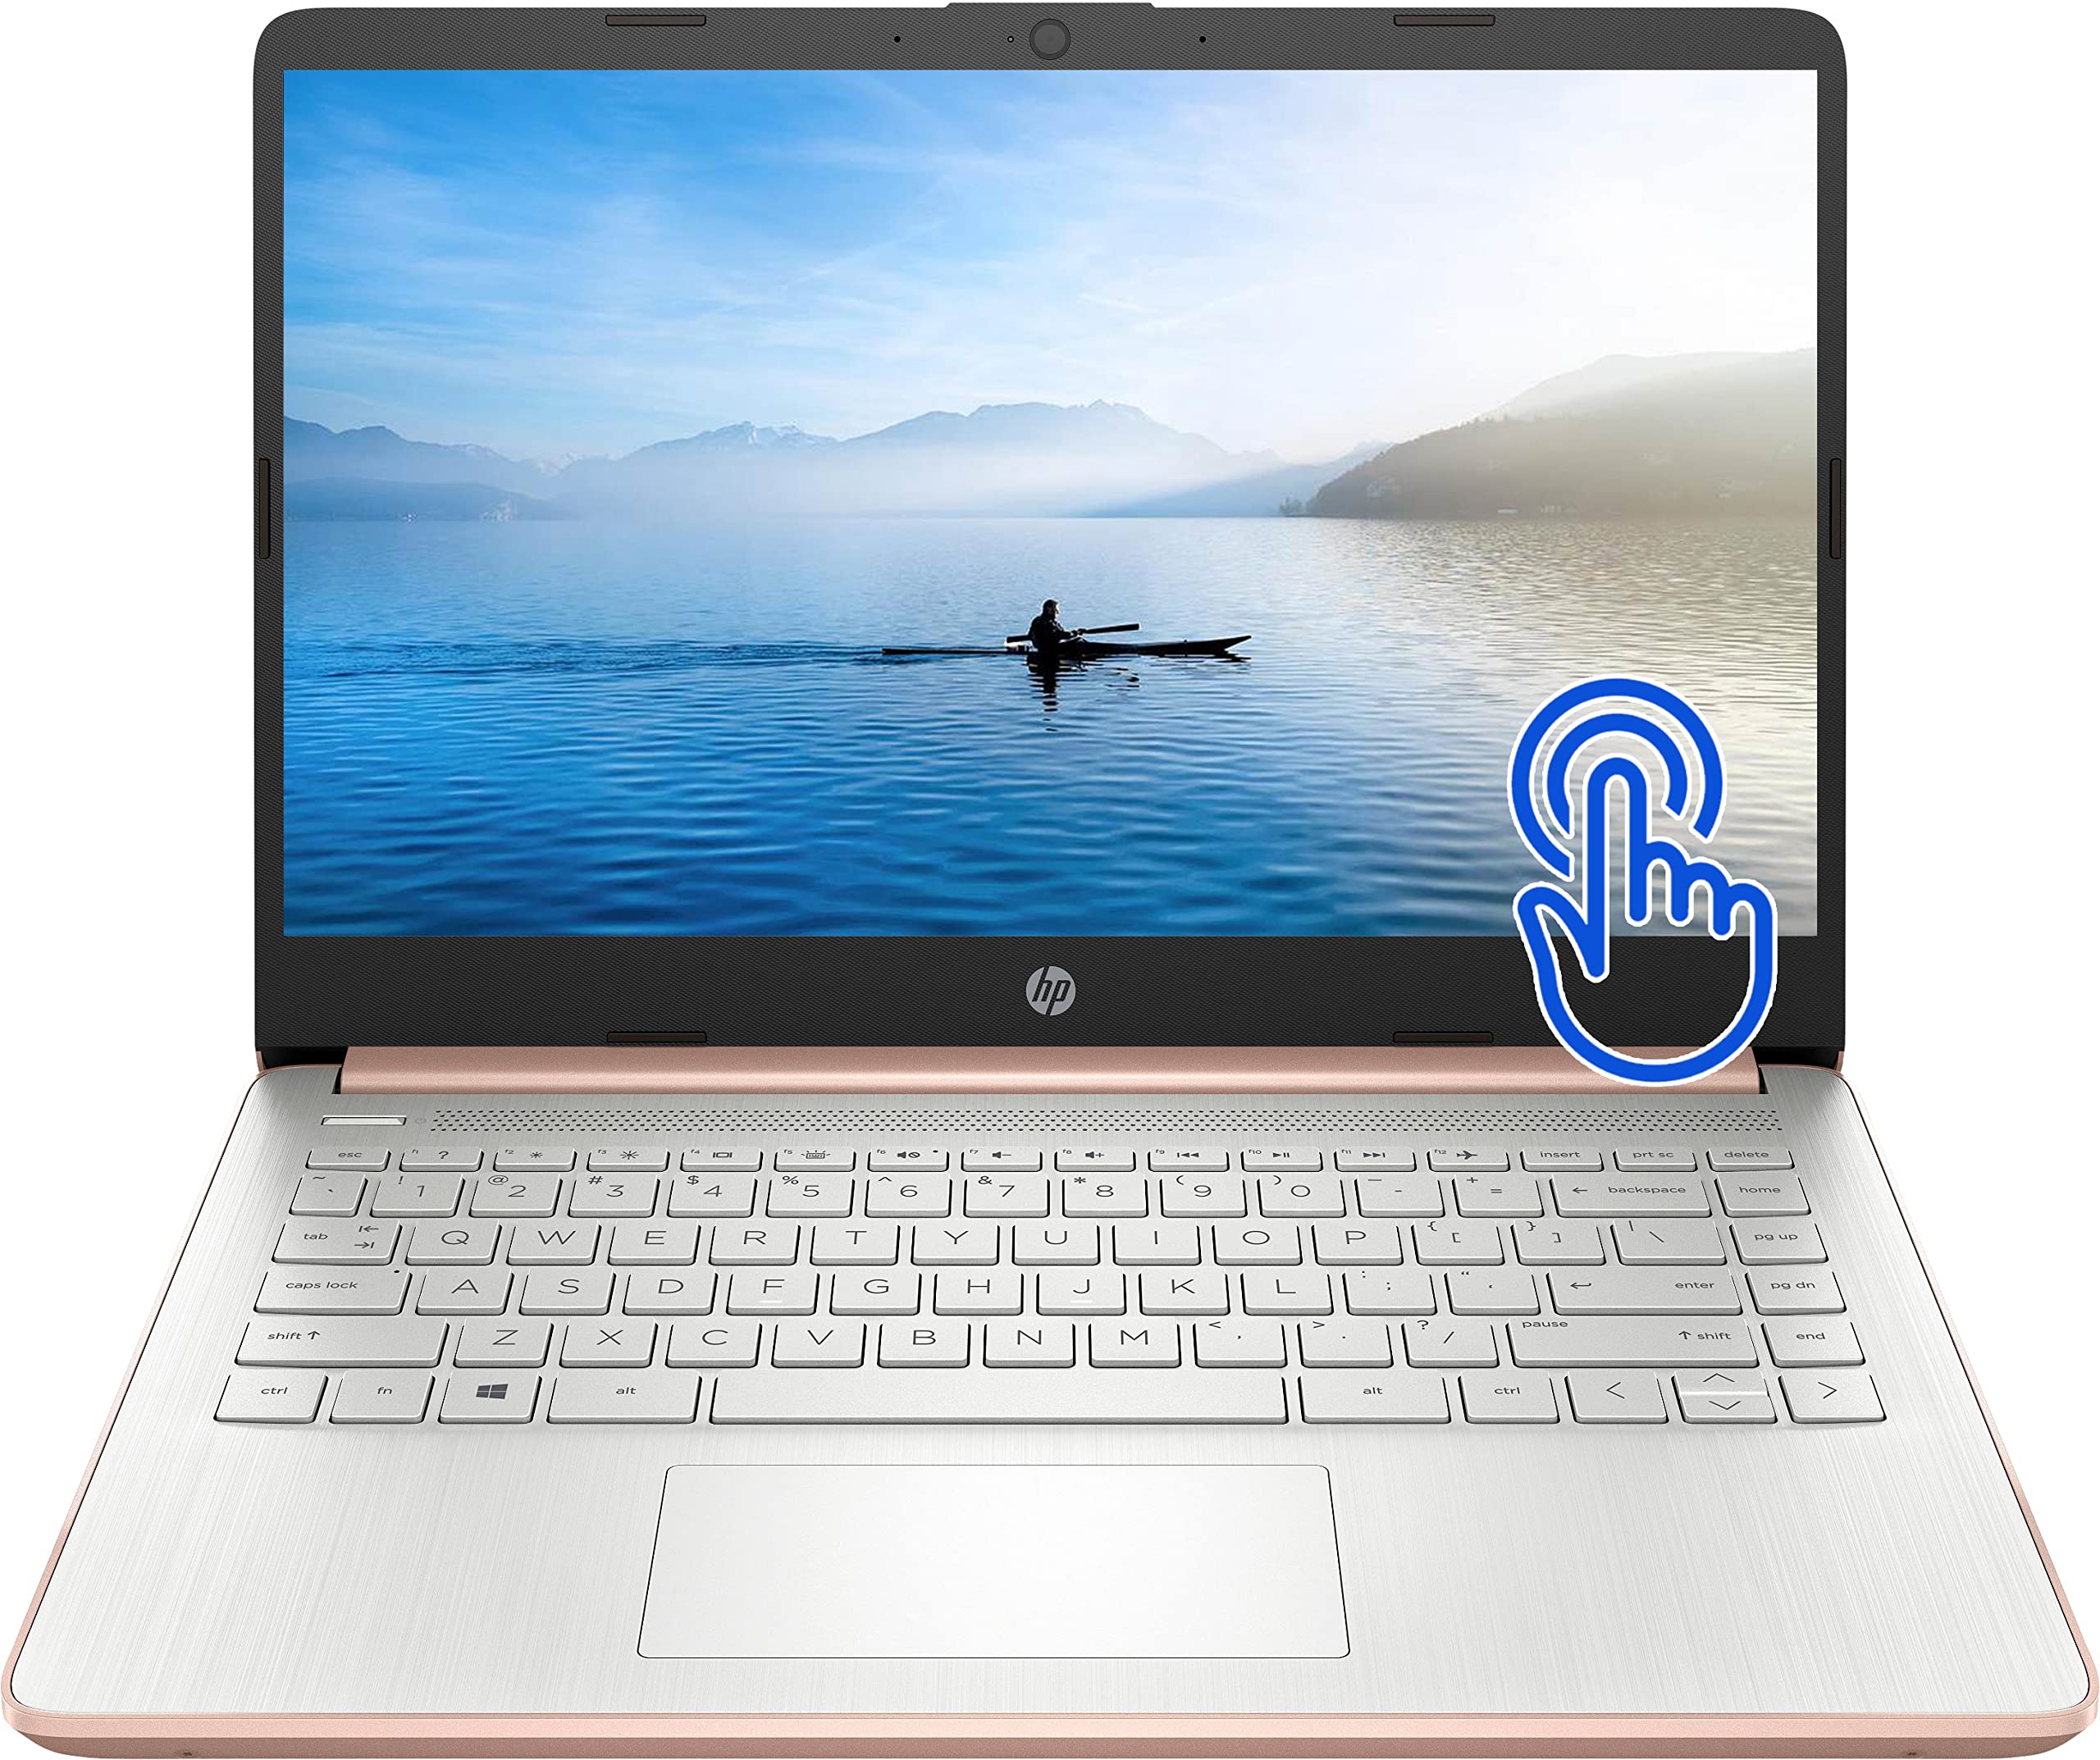 HP Stream 14inch HD Touchscreen Display, Intel Celeron Dual-Core Processor, 4GB RAM, 128GB Storage (64GB eMMC+64GB Card), Webcam, 1-Year Microsoft 365, Win11, Rose Gold, W/GaLiMu